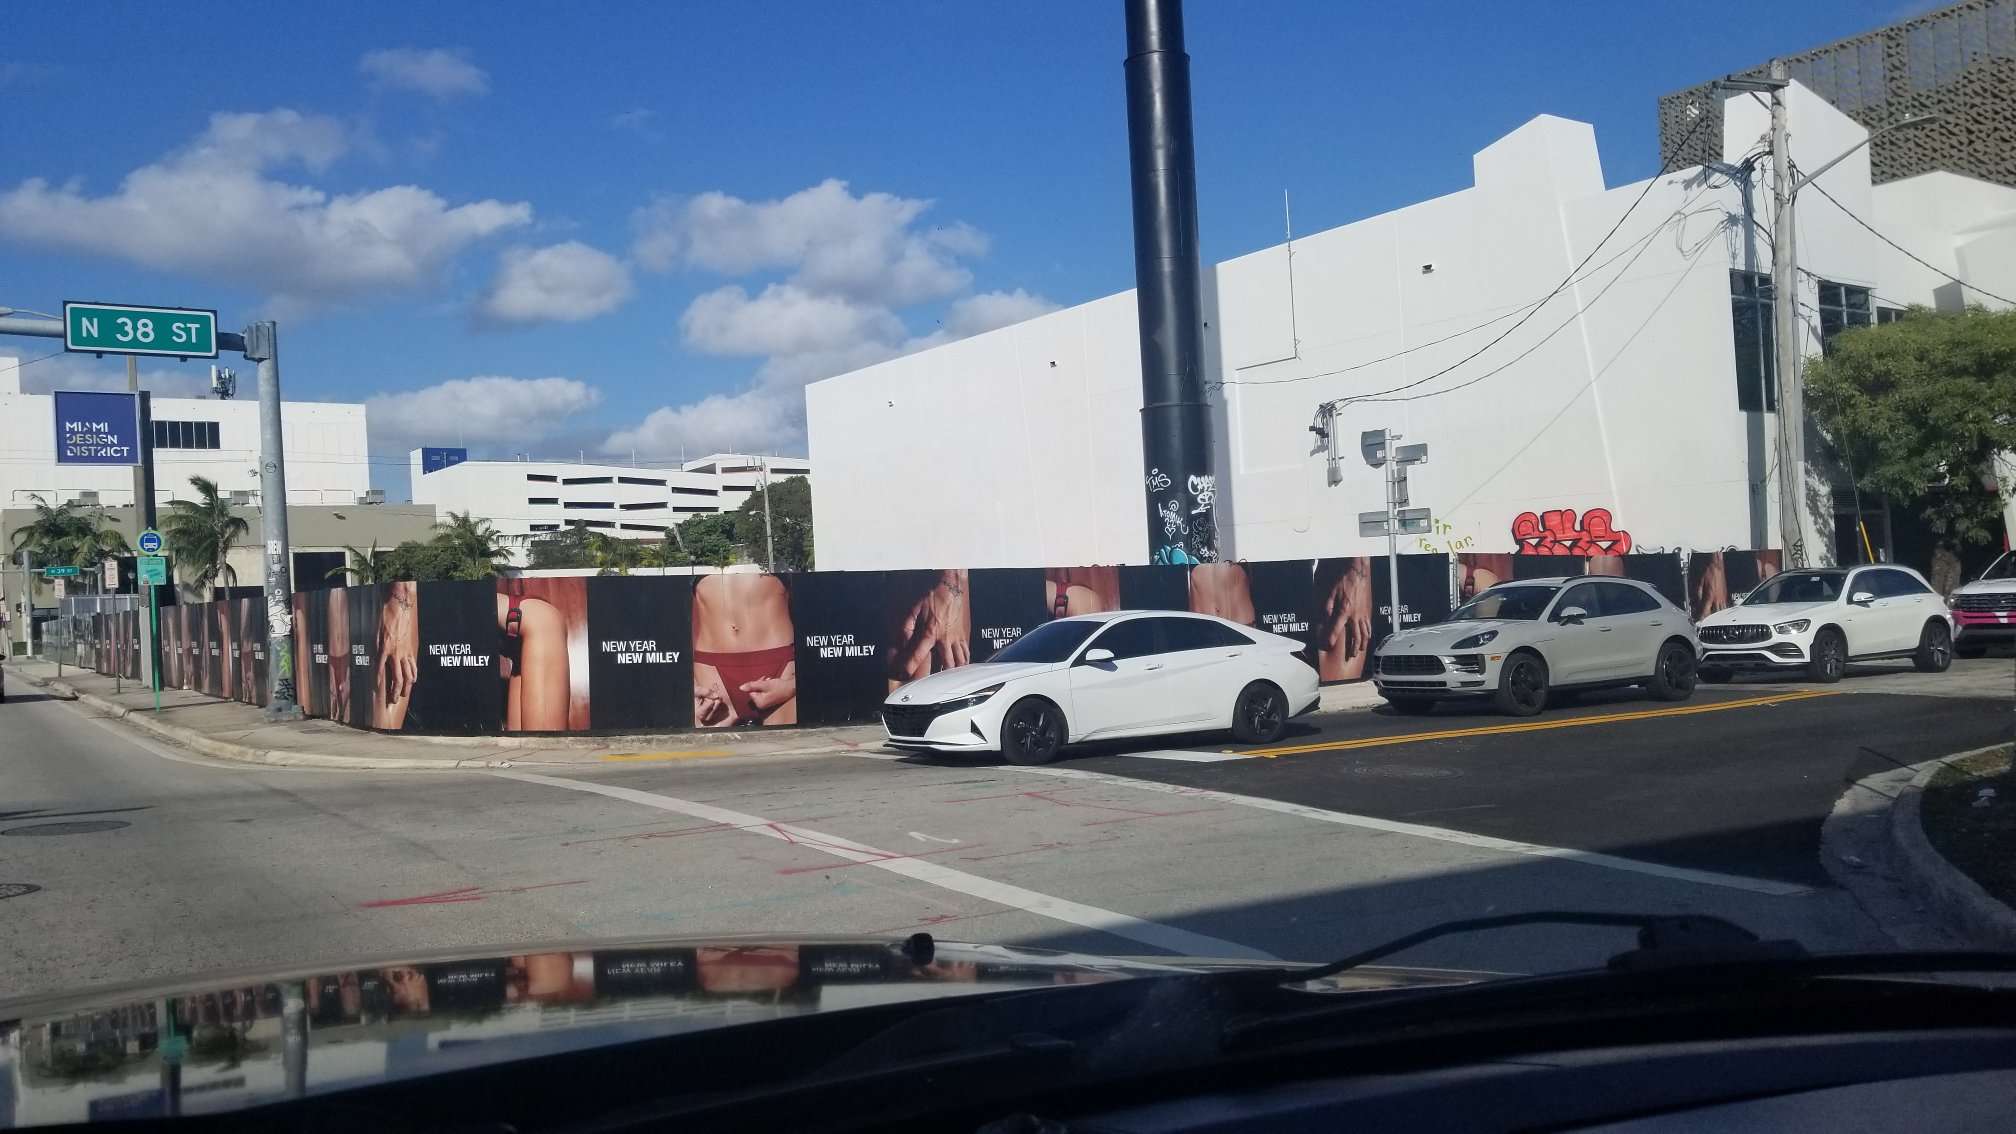 Miley Cyrus OOH Advertising Flowers Miami N 38th Street